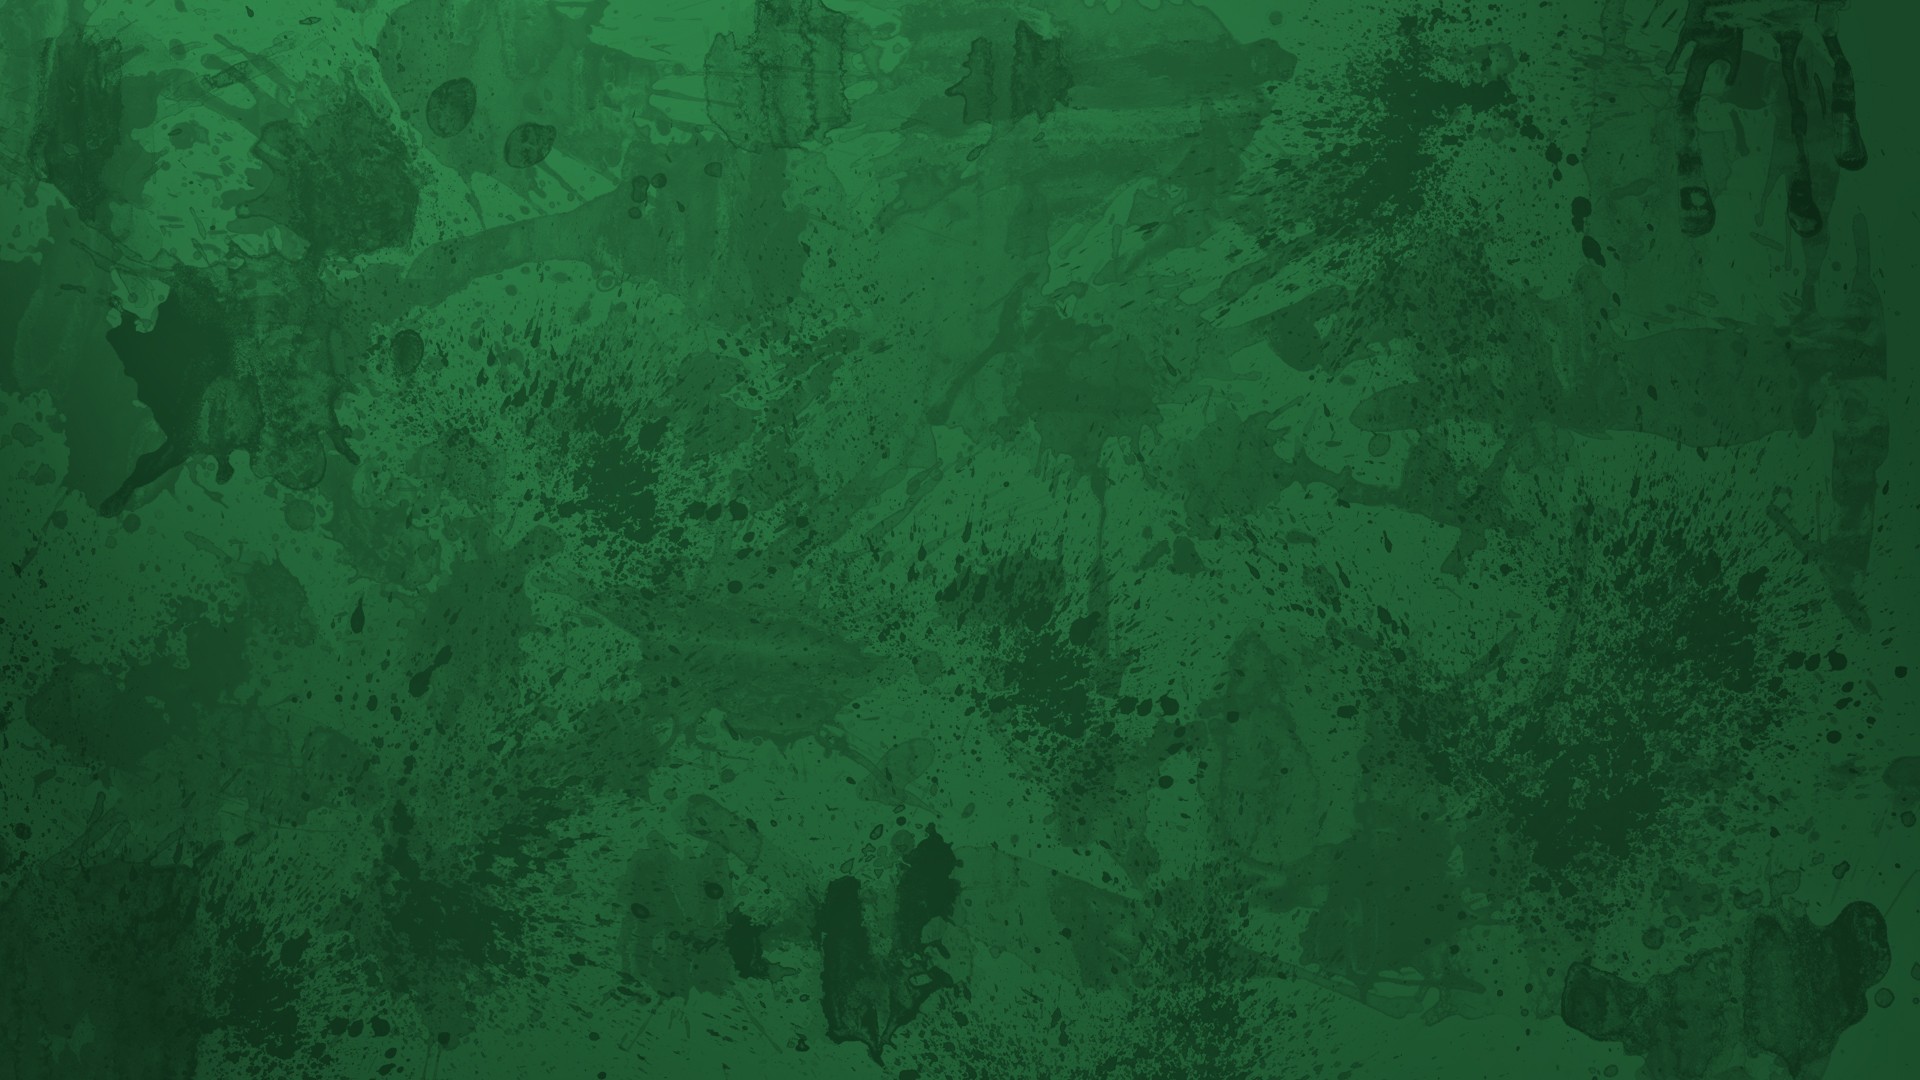 General 1920x1080 simple background minimalism abstract green grunge digital art green background texture